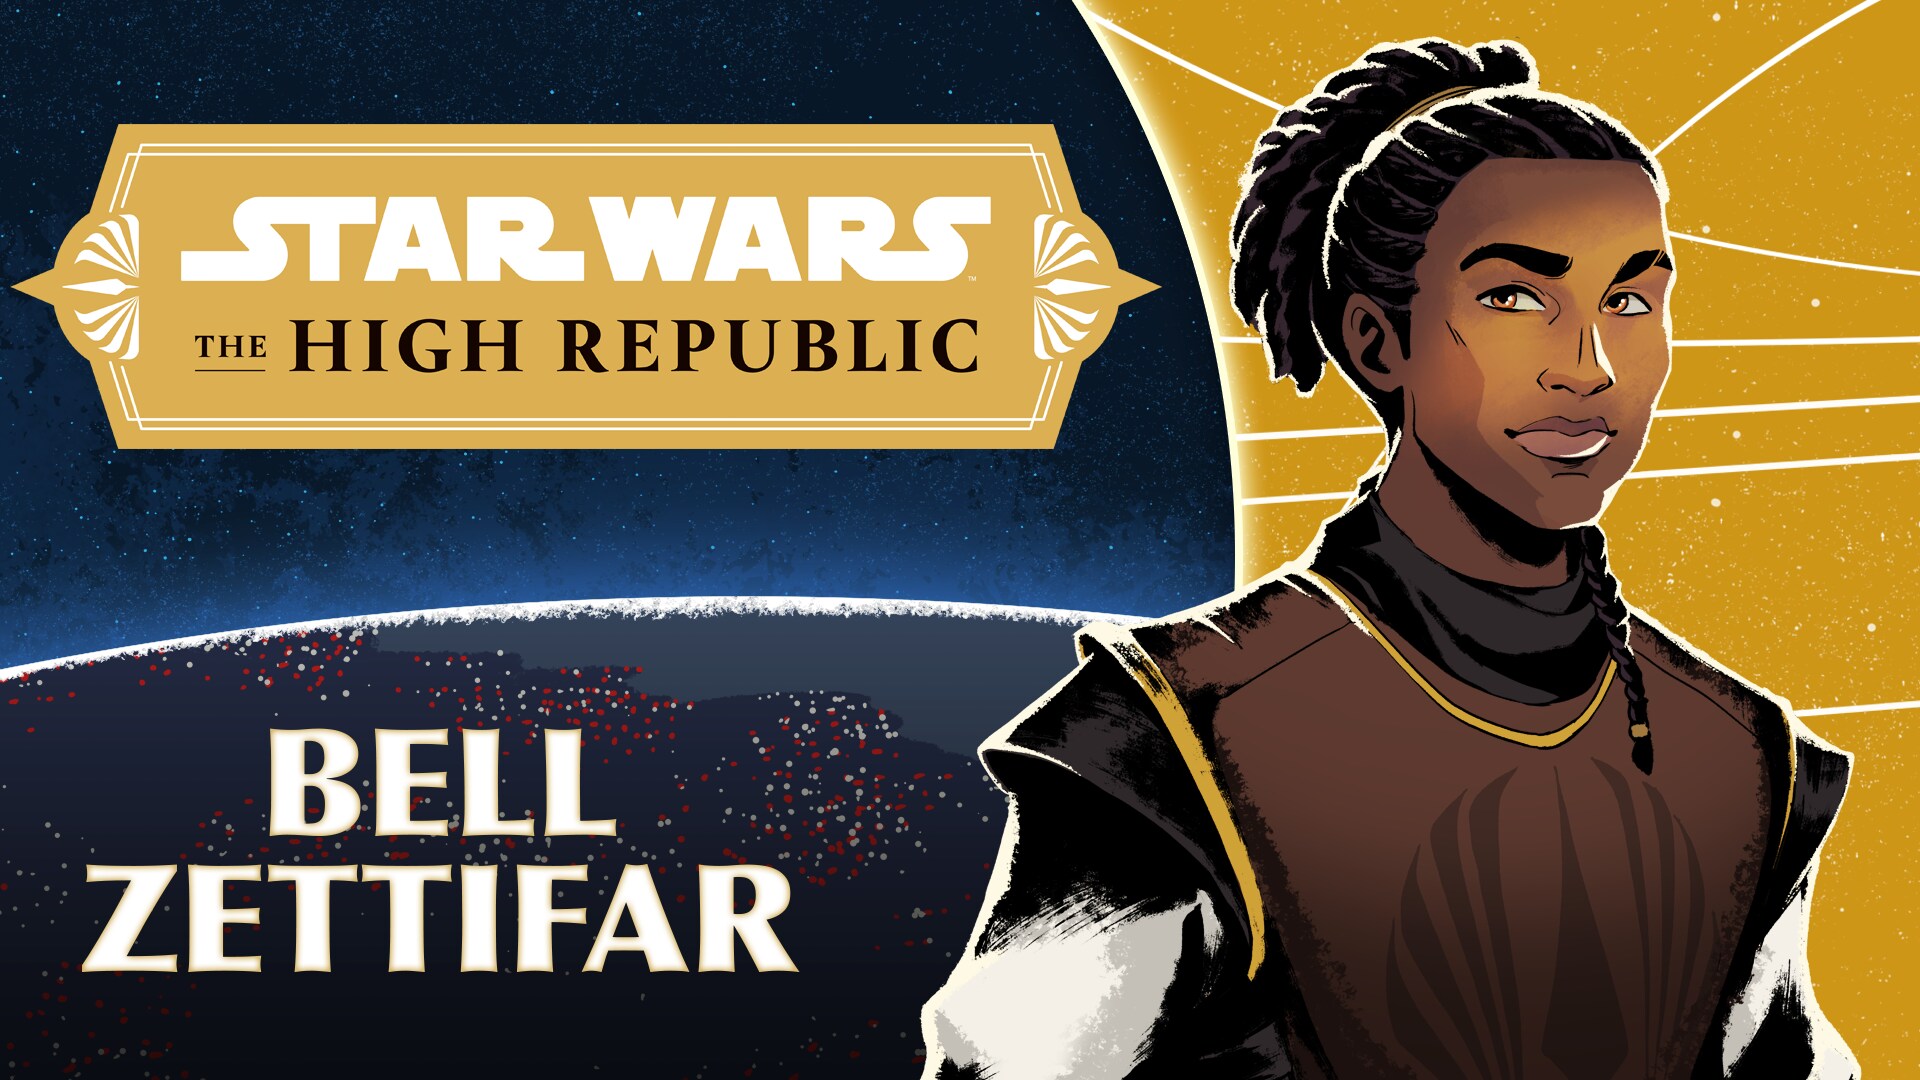 Jedi Padawan Bell Zettifar | Characters of Star Wars: the High Republic